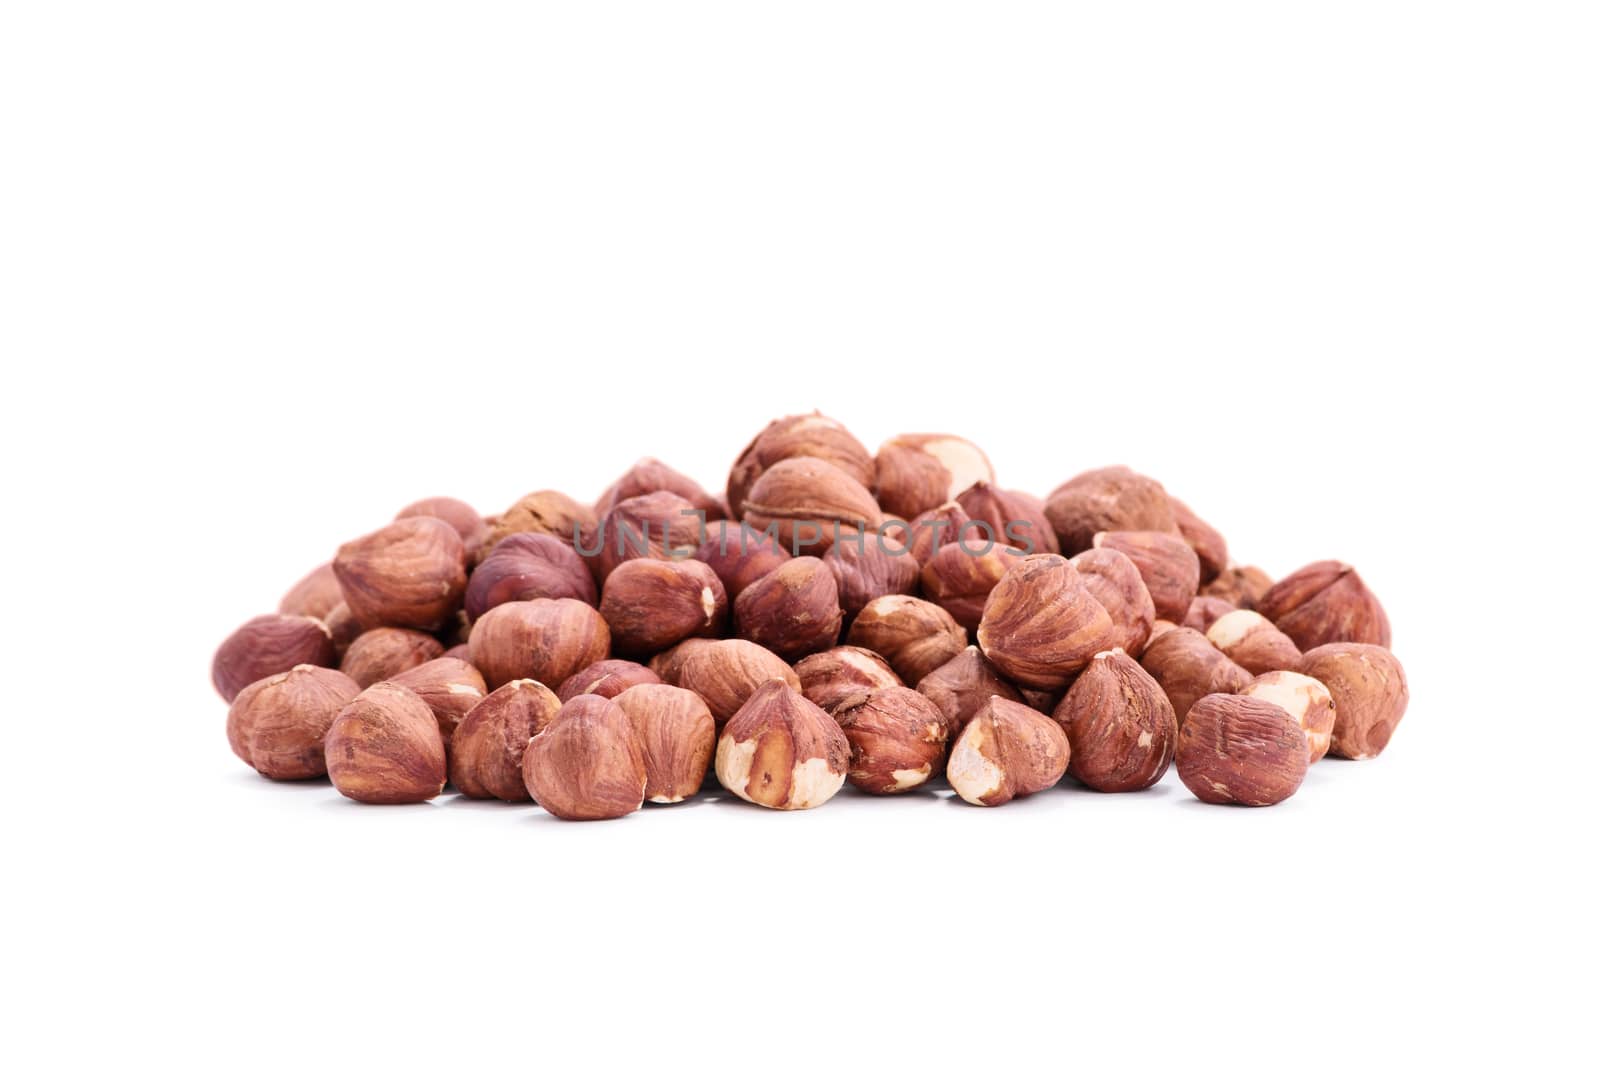 Hazelnuts by Mendelex